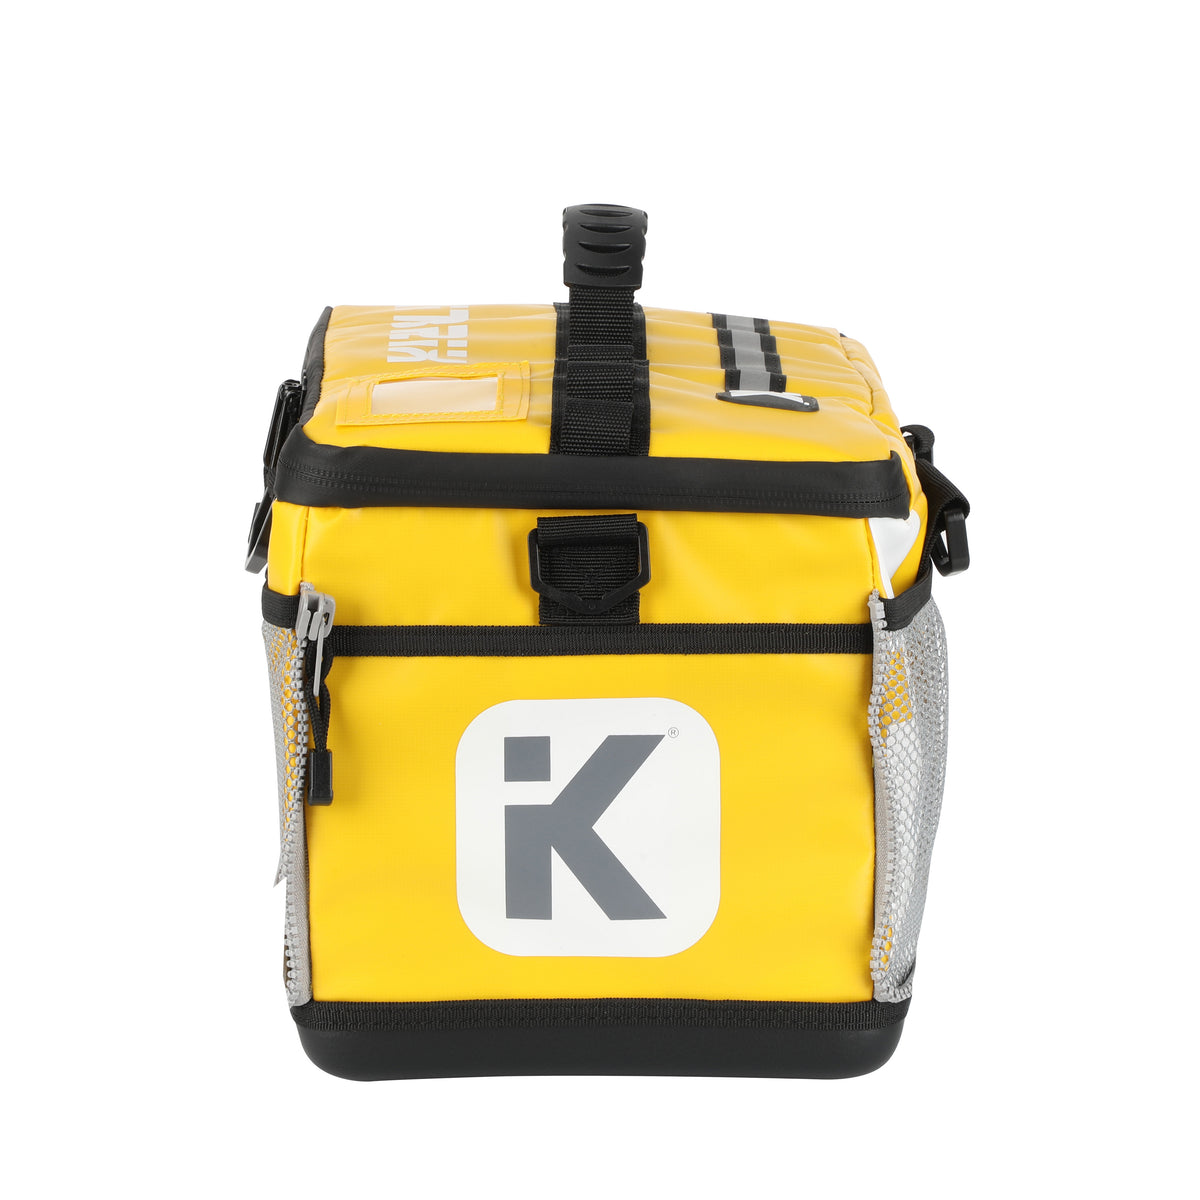 The KitBrix Hero Bag